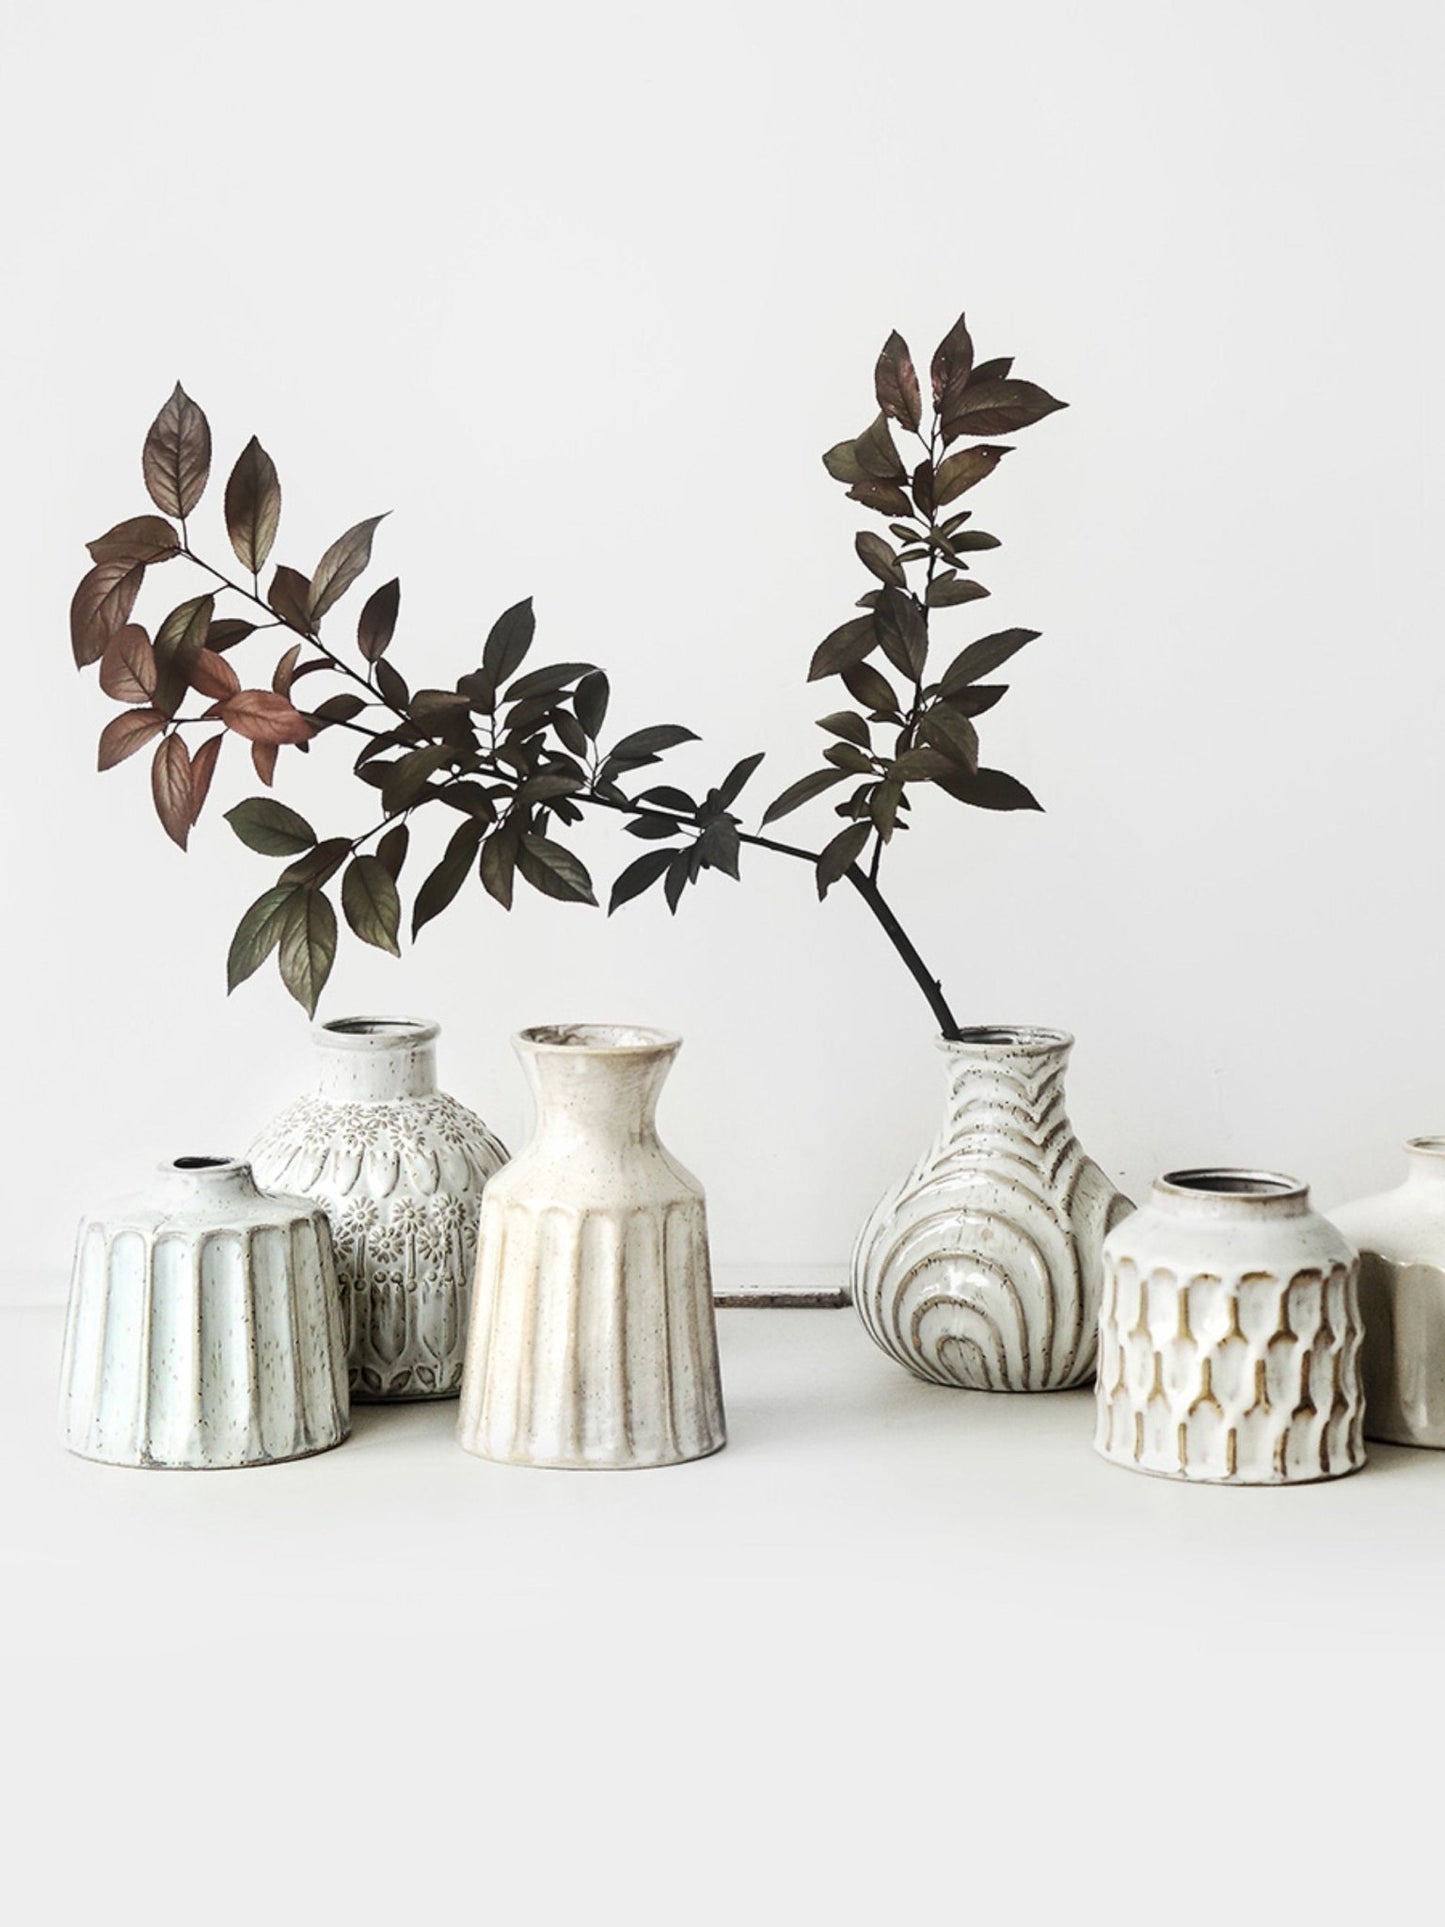 White Chinese Ceramic Table Vase | Zen Decor, Ceramic Vase, Minimalist Vase Ceramic, Asian Decor - -